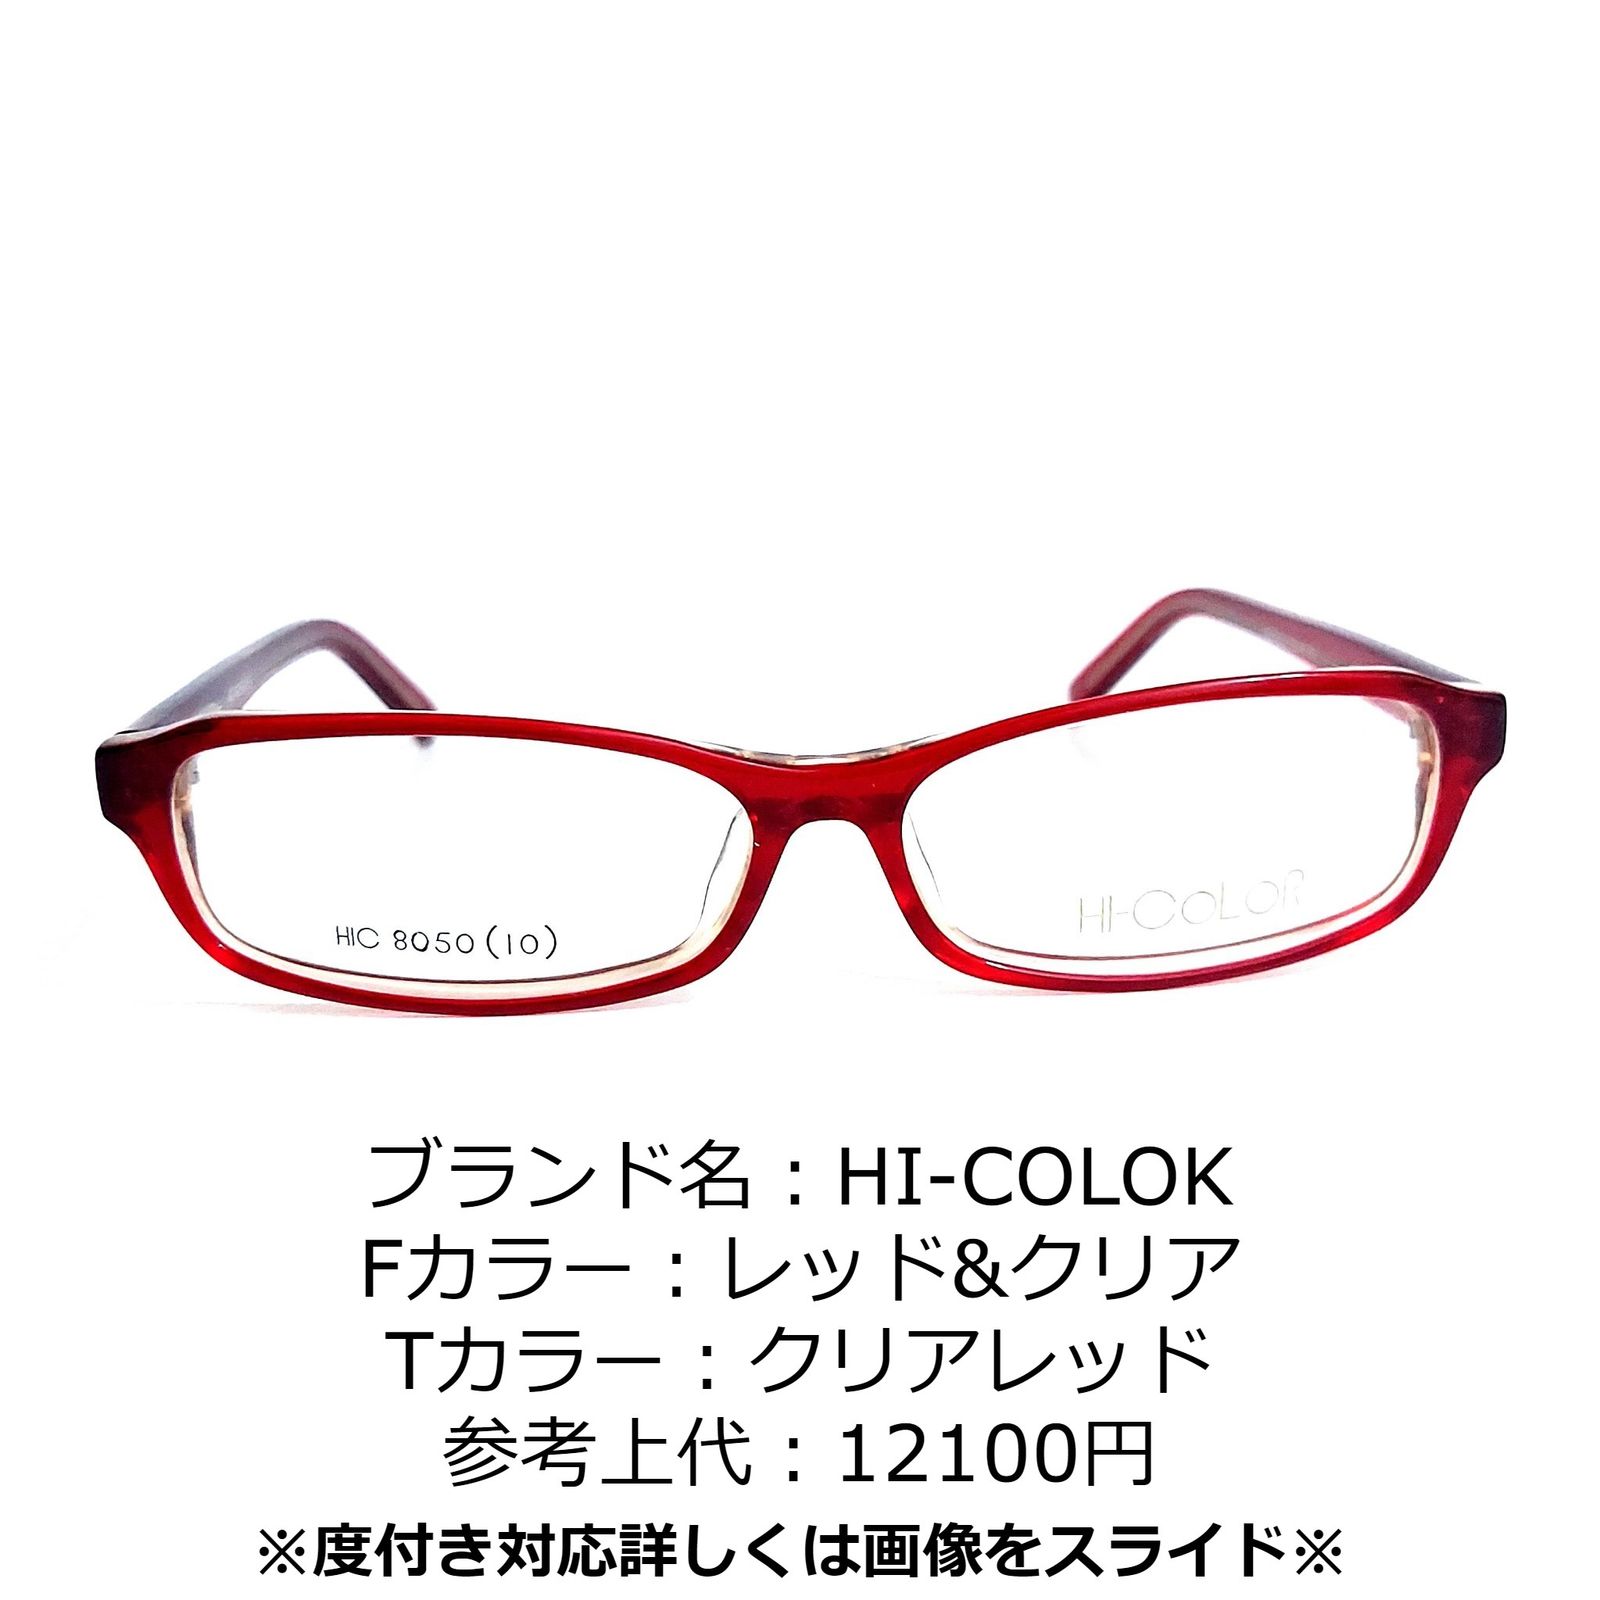 No.1249-メガネ HI-COLOK【フレームのみ価格】 - スッキリ生活専門店